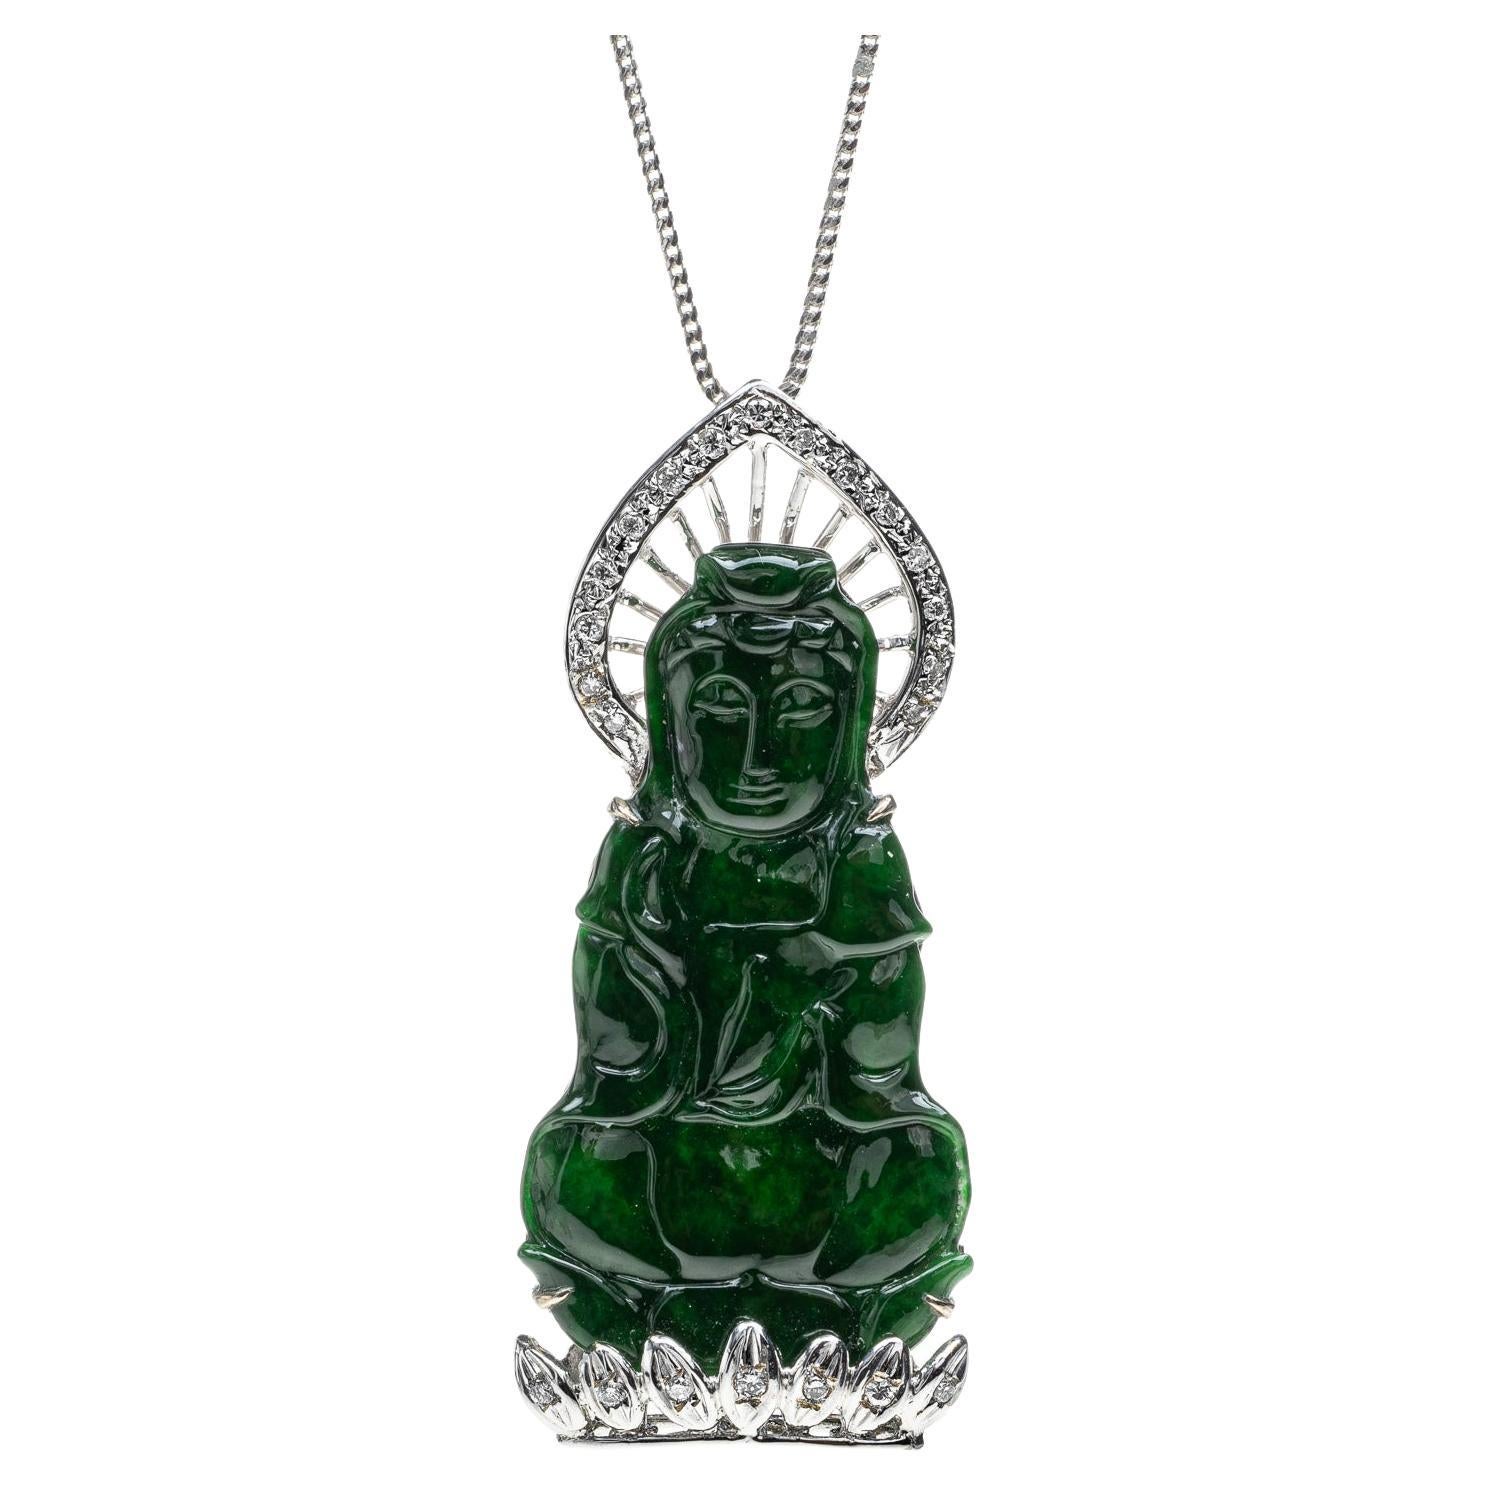 Where to Get Buddha Necklace from | TikTok